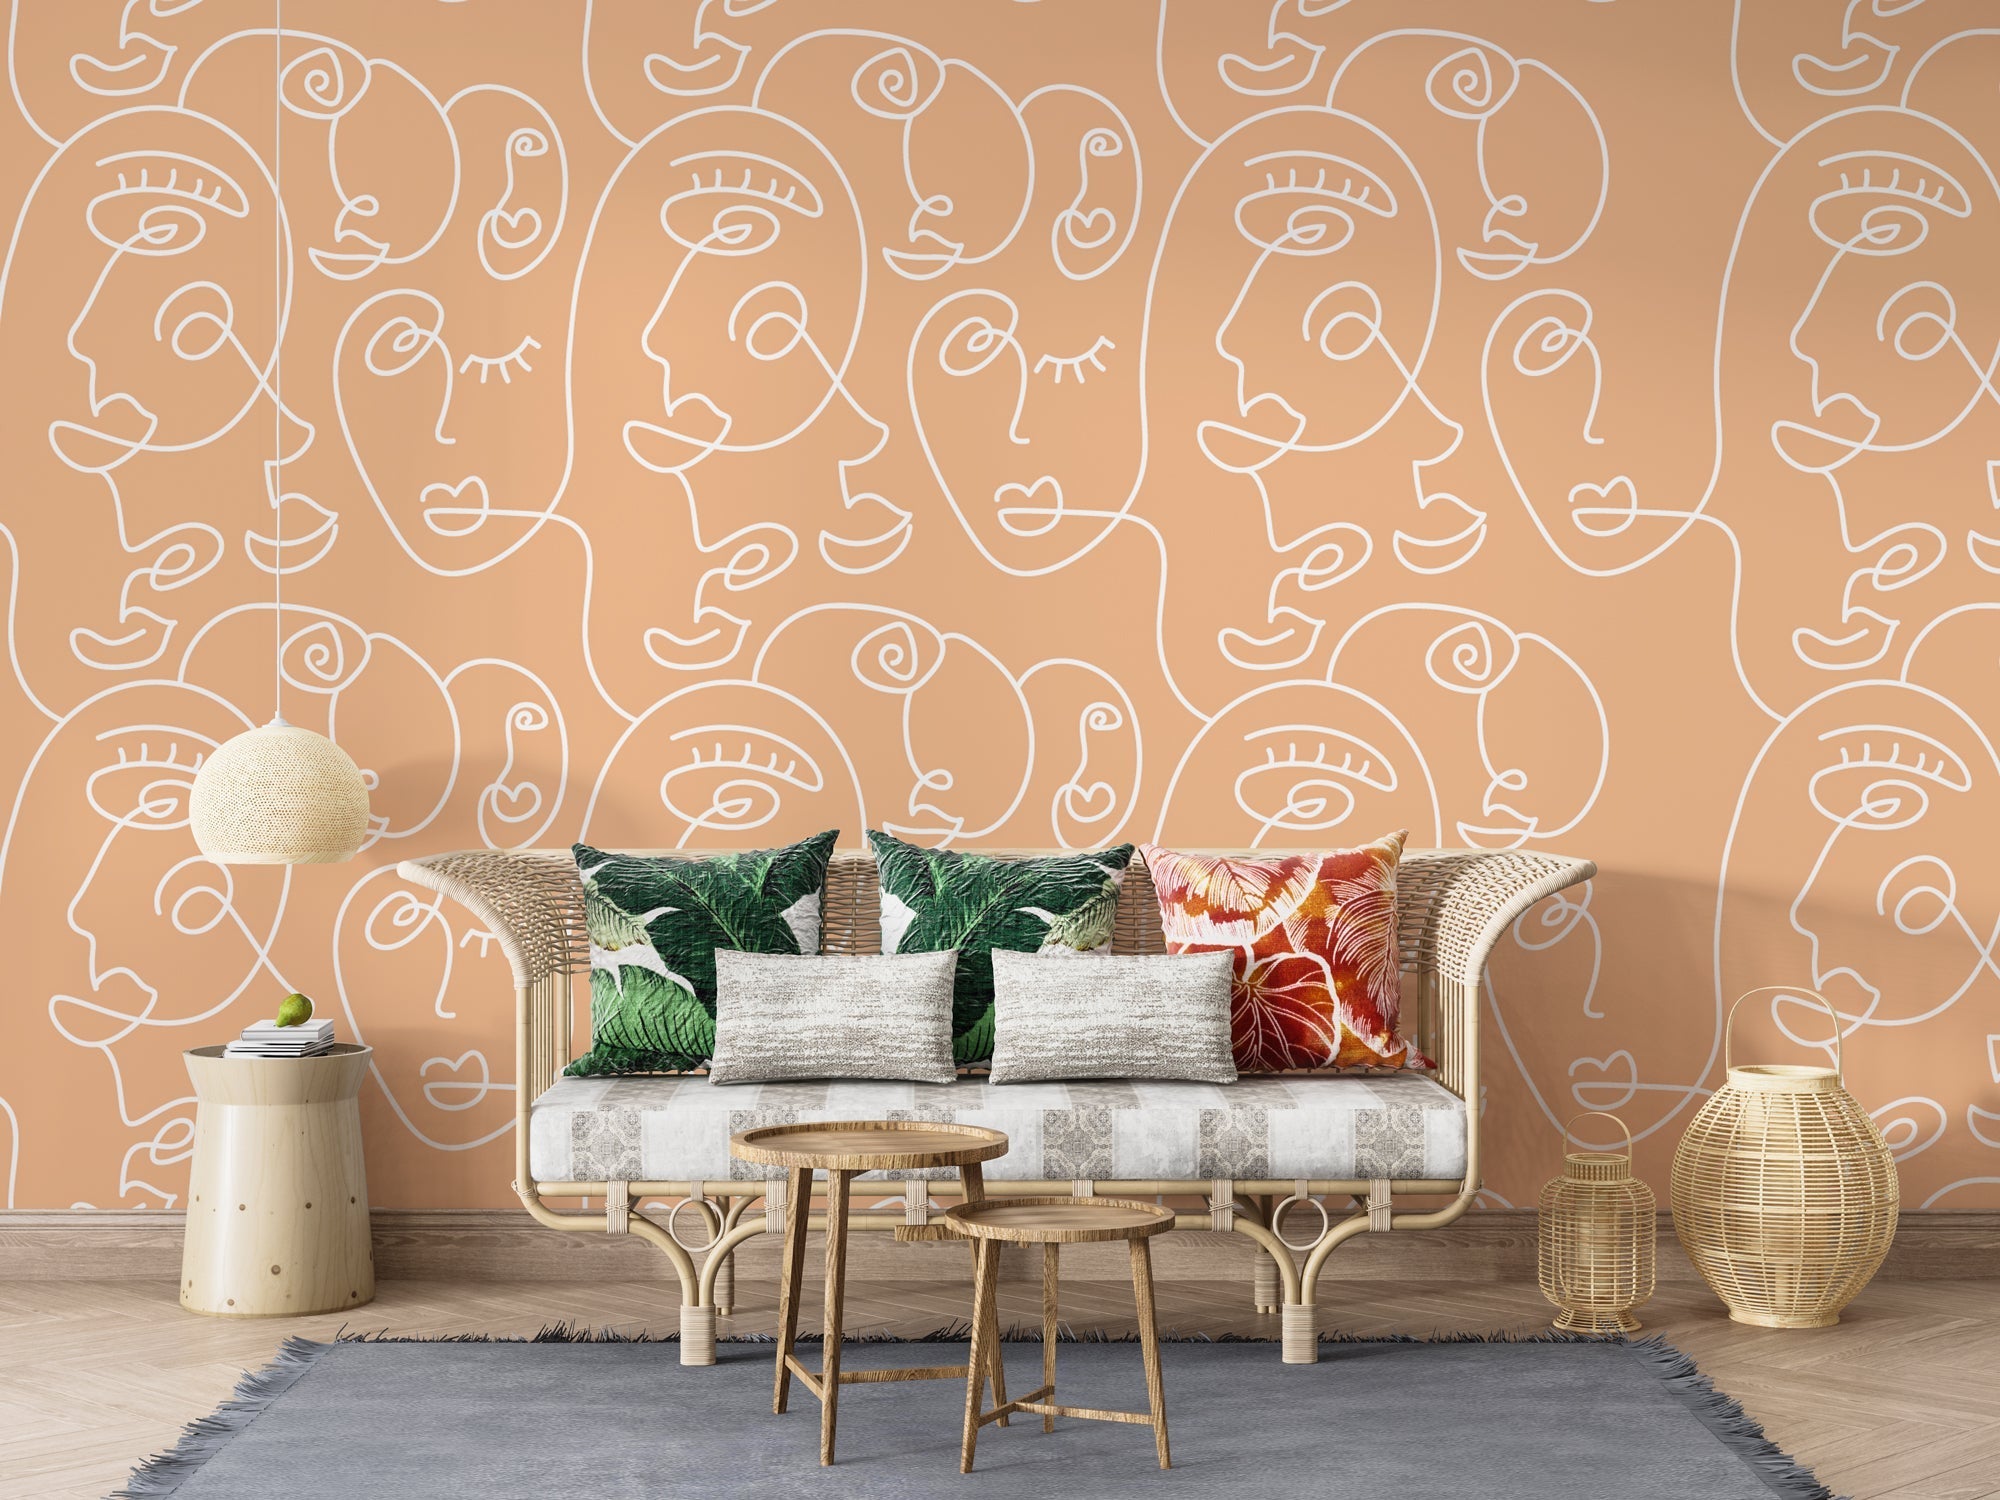 Matisse Line Art Wallpaper Mural: Enhance Your Space